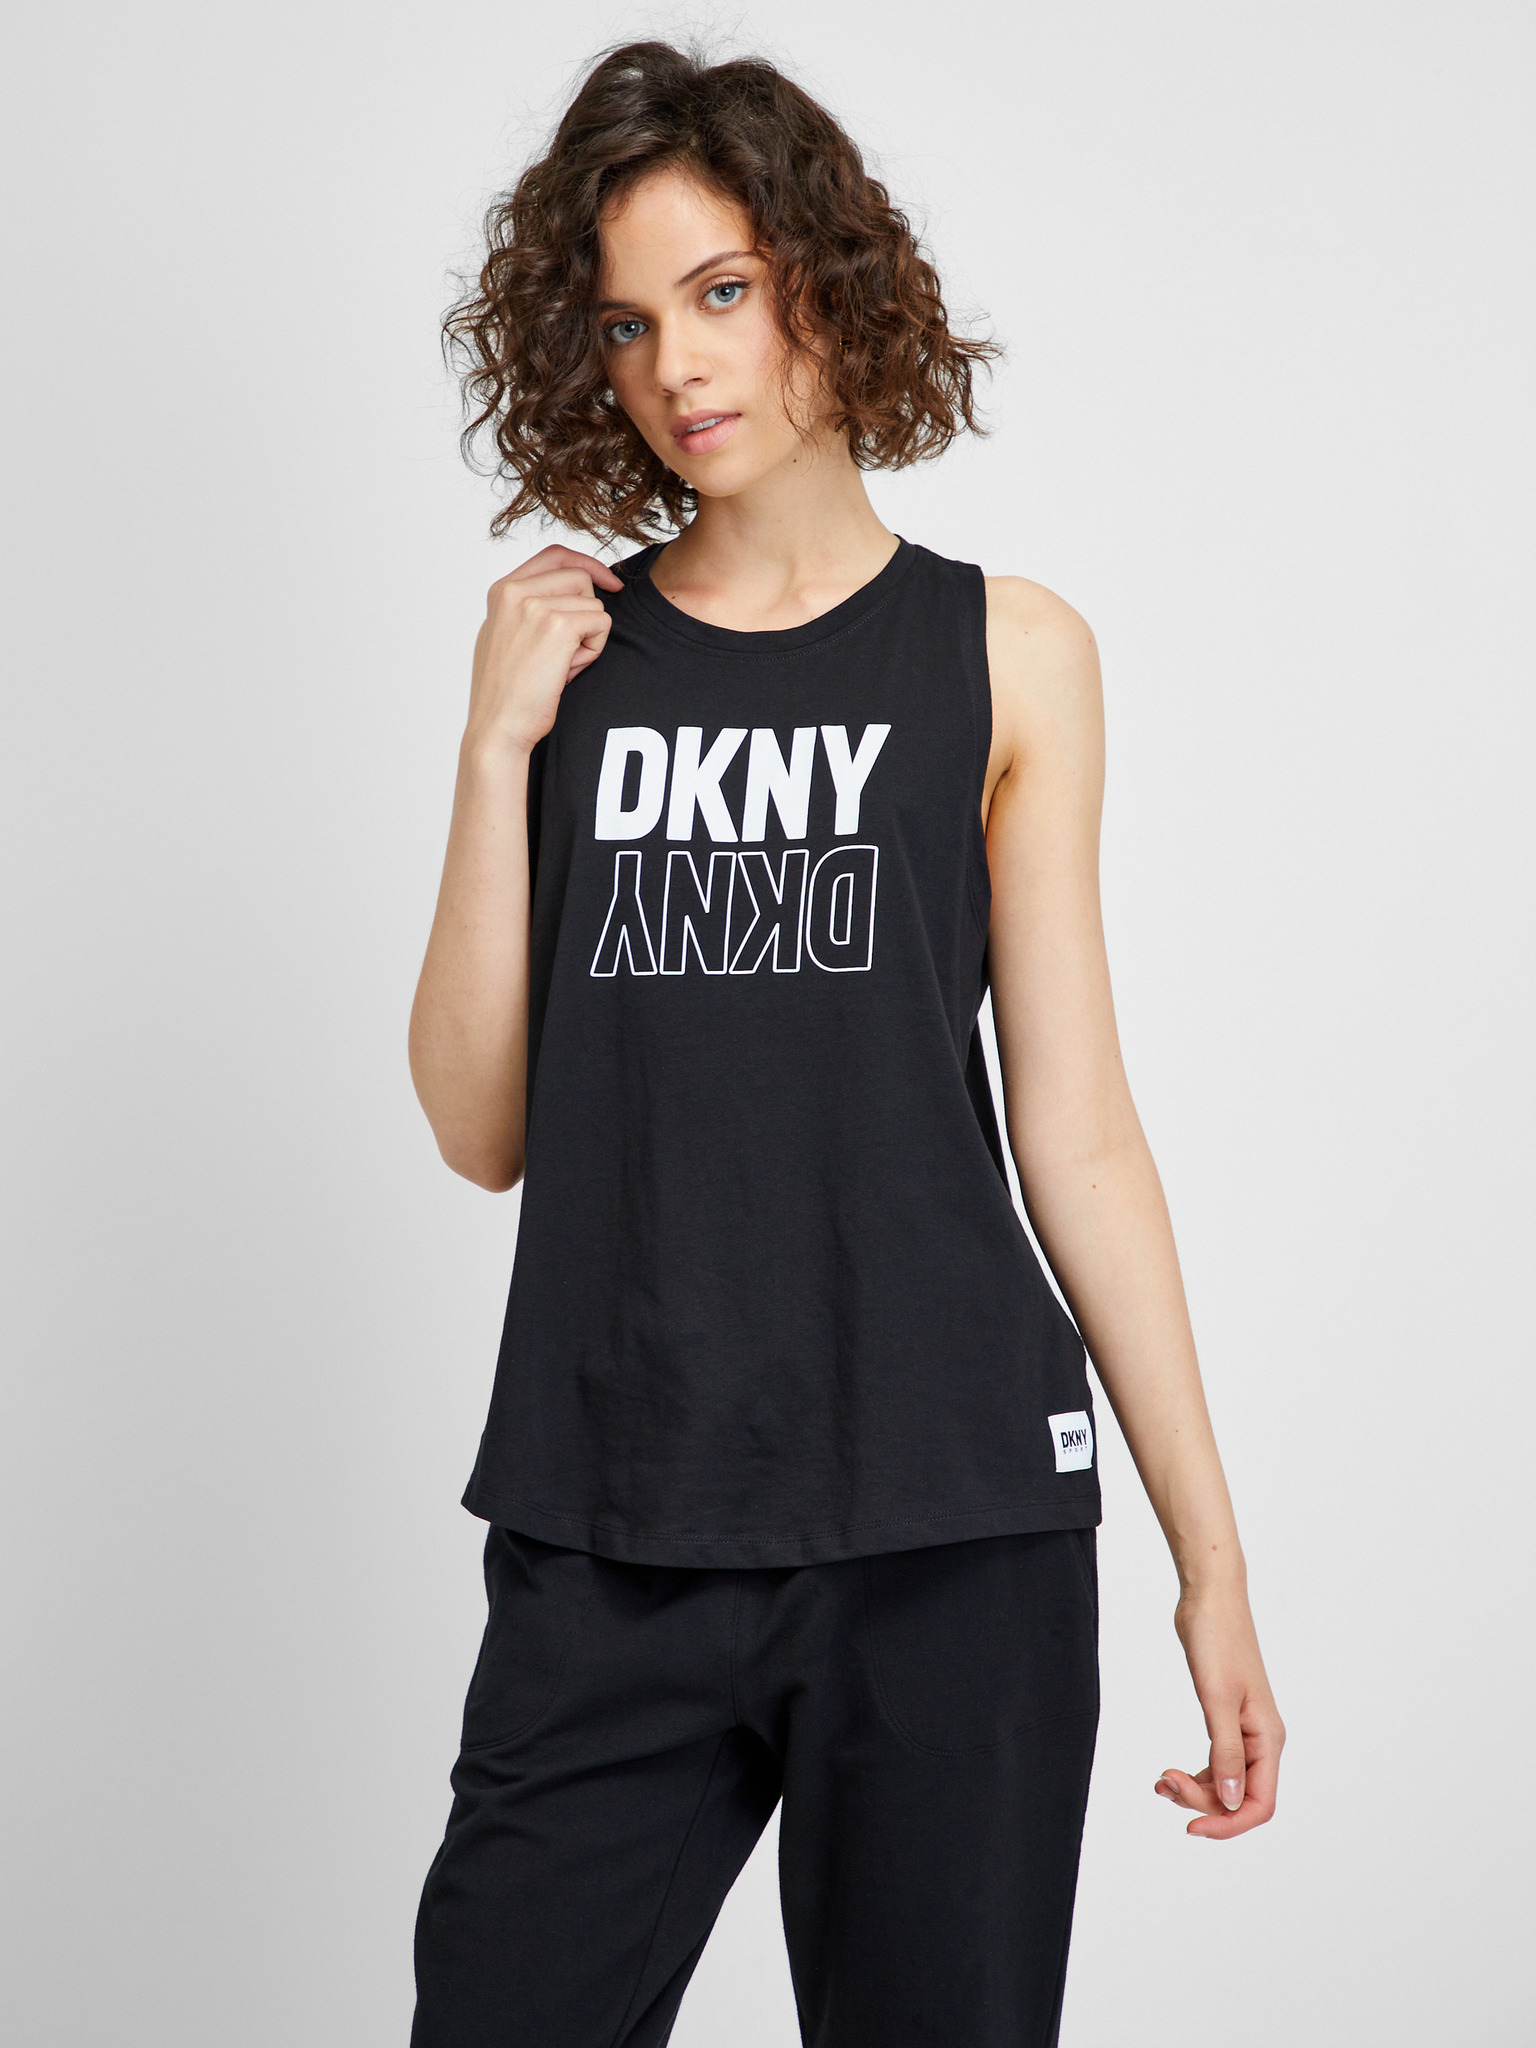 DKNY Women's Cotton Logo Tank Top - Macy's